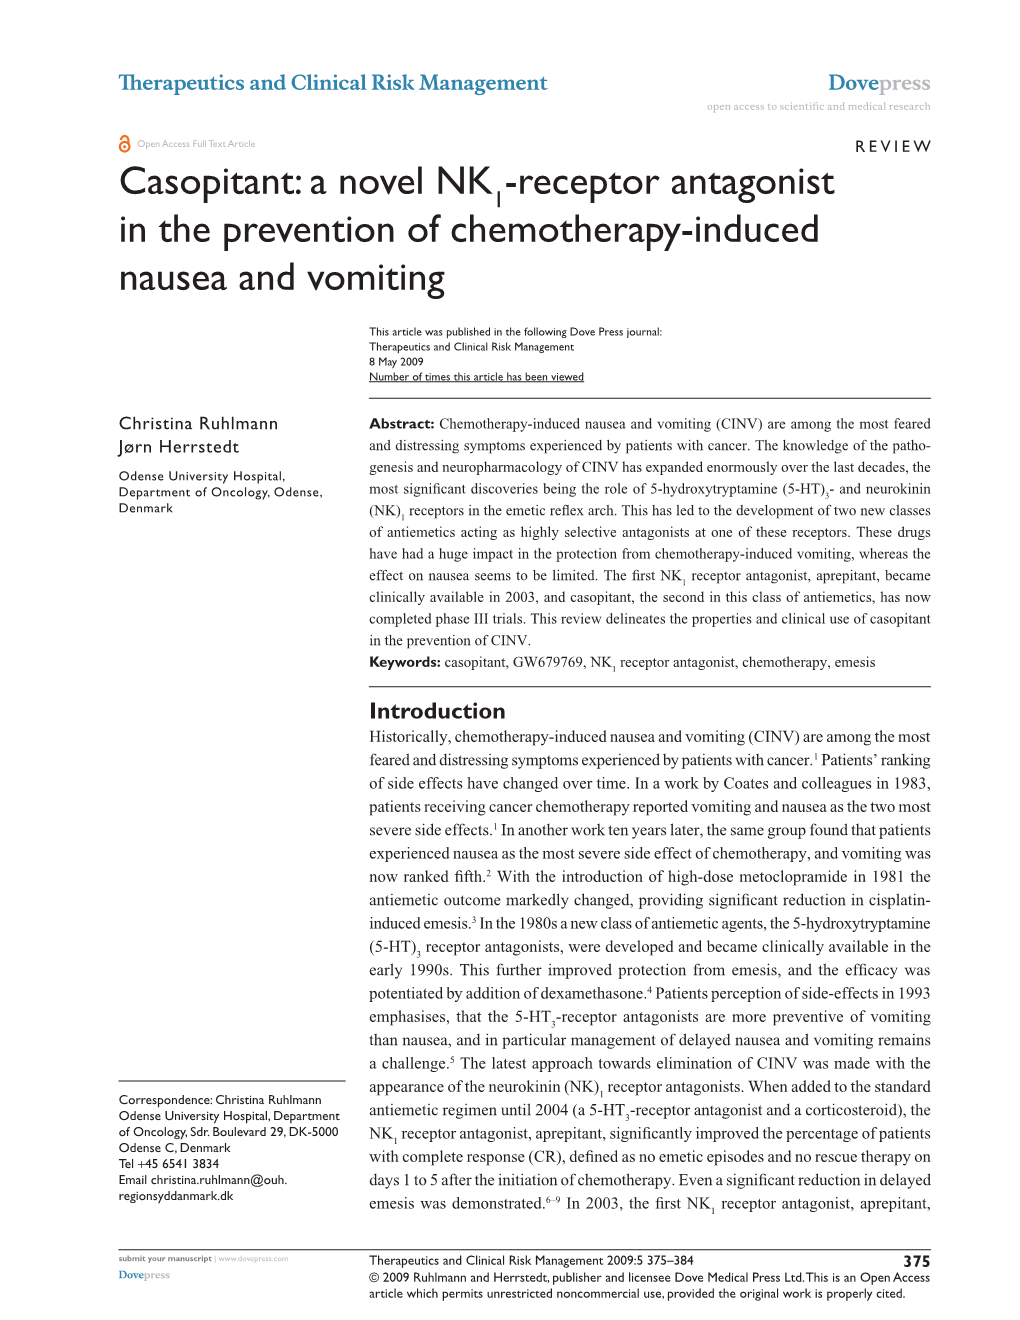 TCRM-4026-Casopitant: a Novel NK1-Receptor Antagonist In